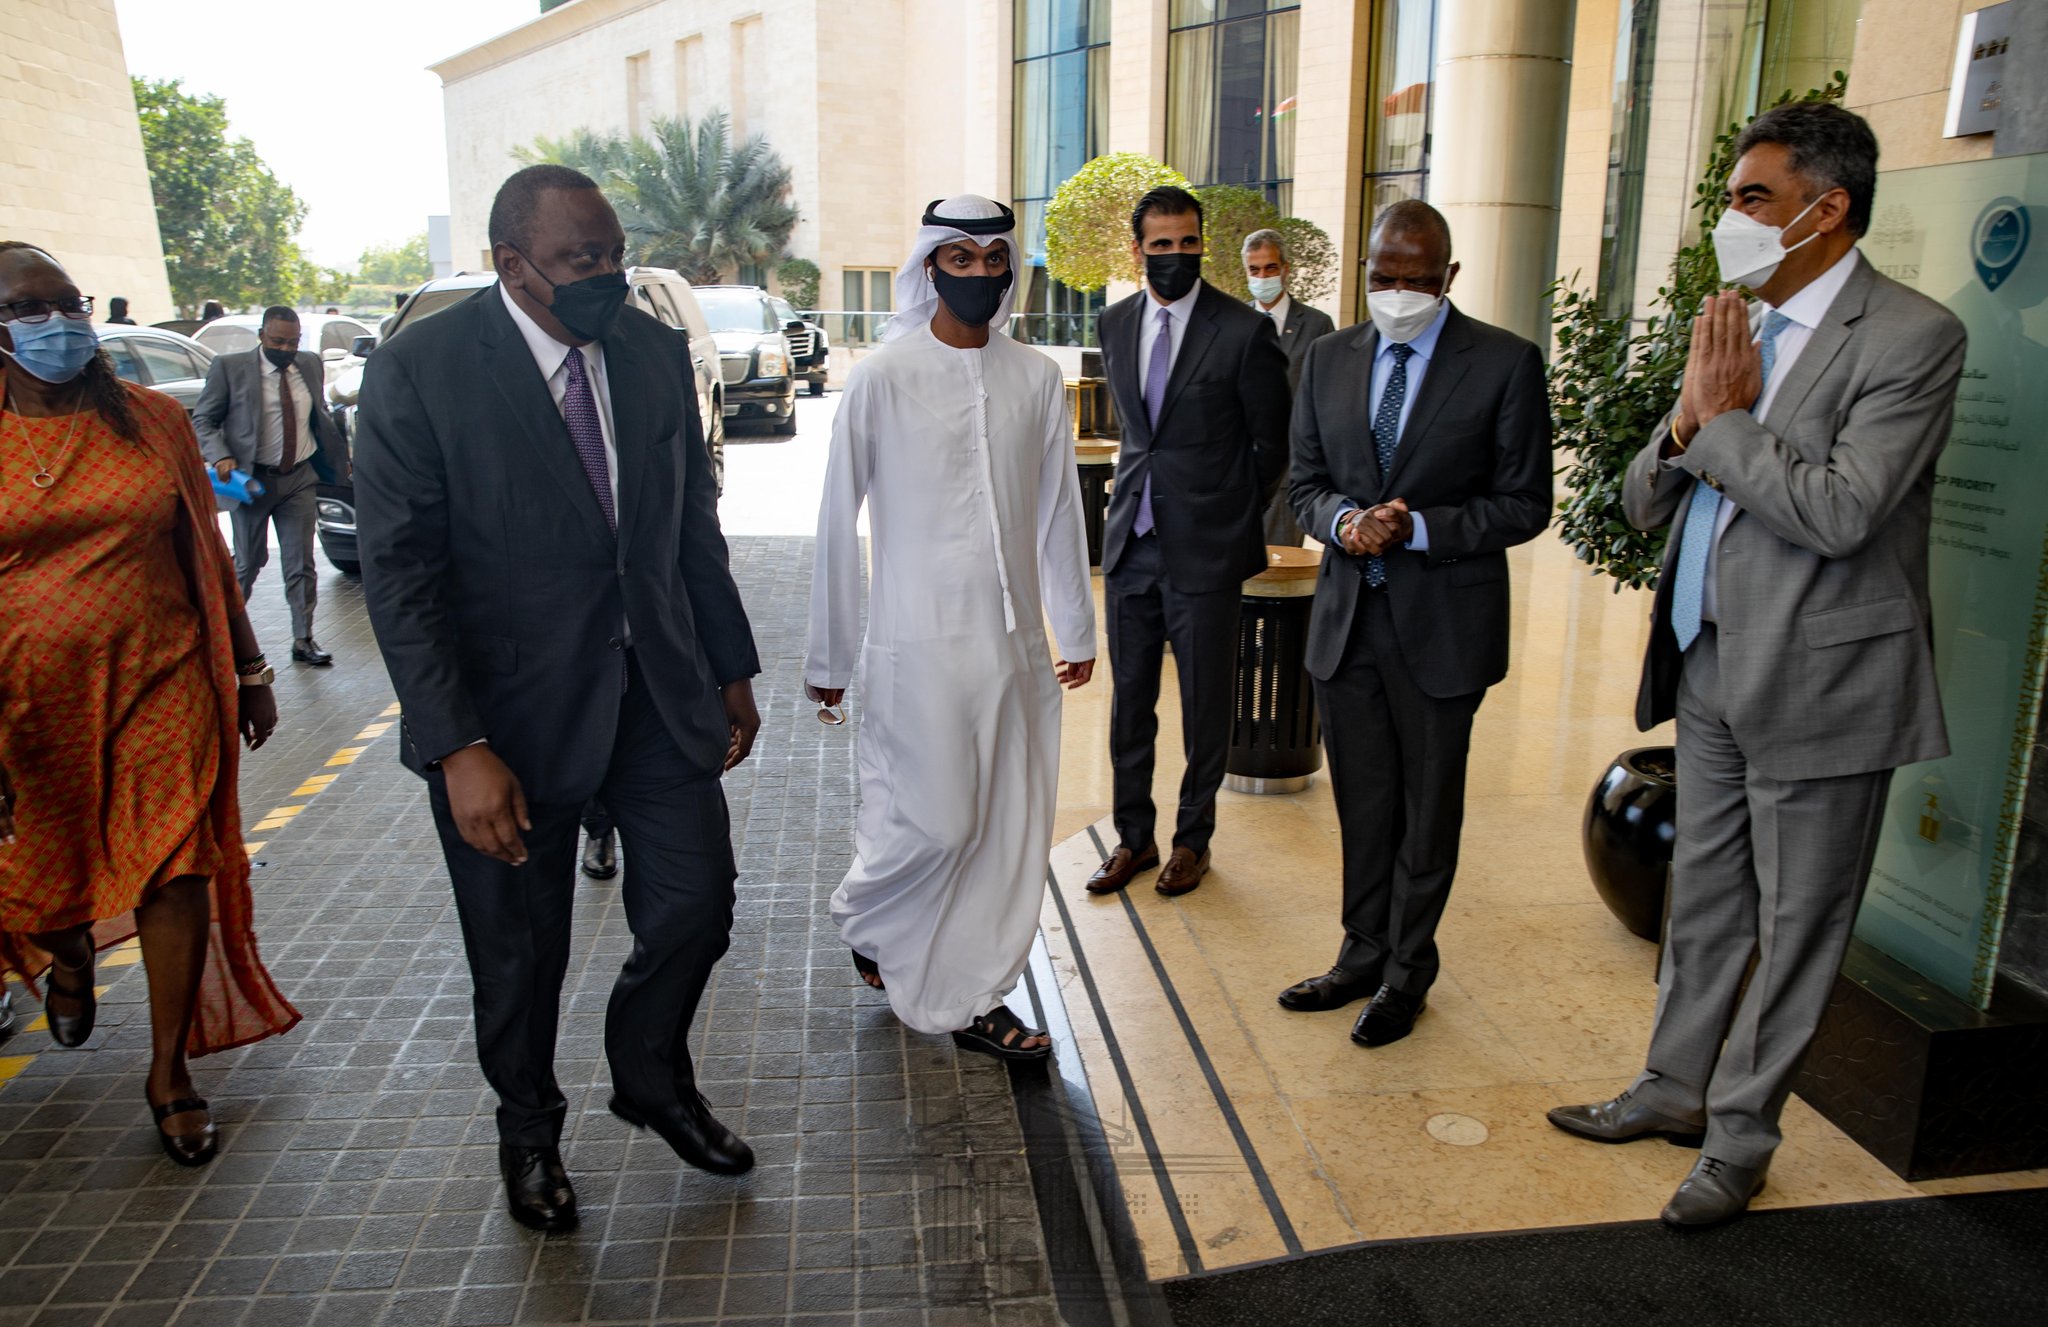 President Uhuru Kenyatta arrives in Dubai for the GCC. www.theexchange.africa